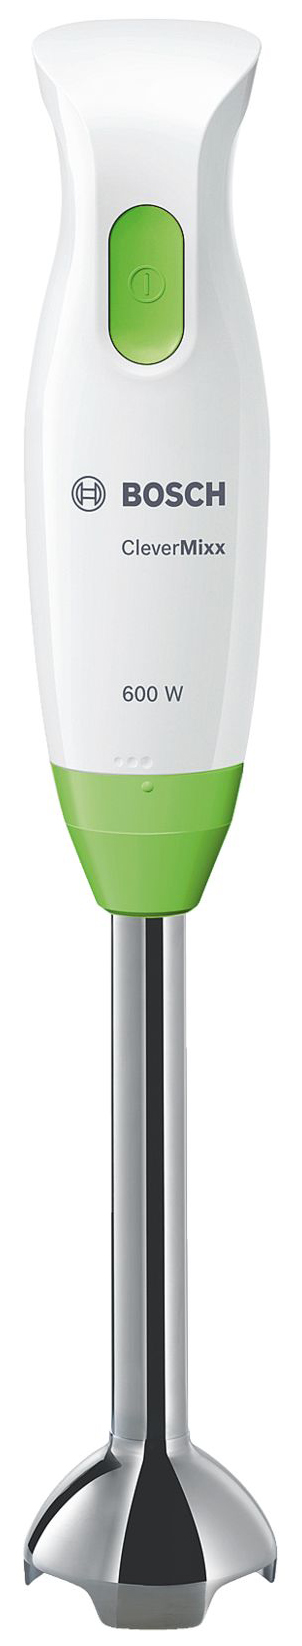 Погружной блендер Bosch MSM2623G White/Green измельчитель bosch